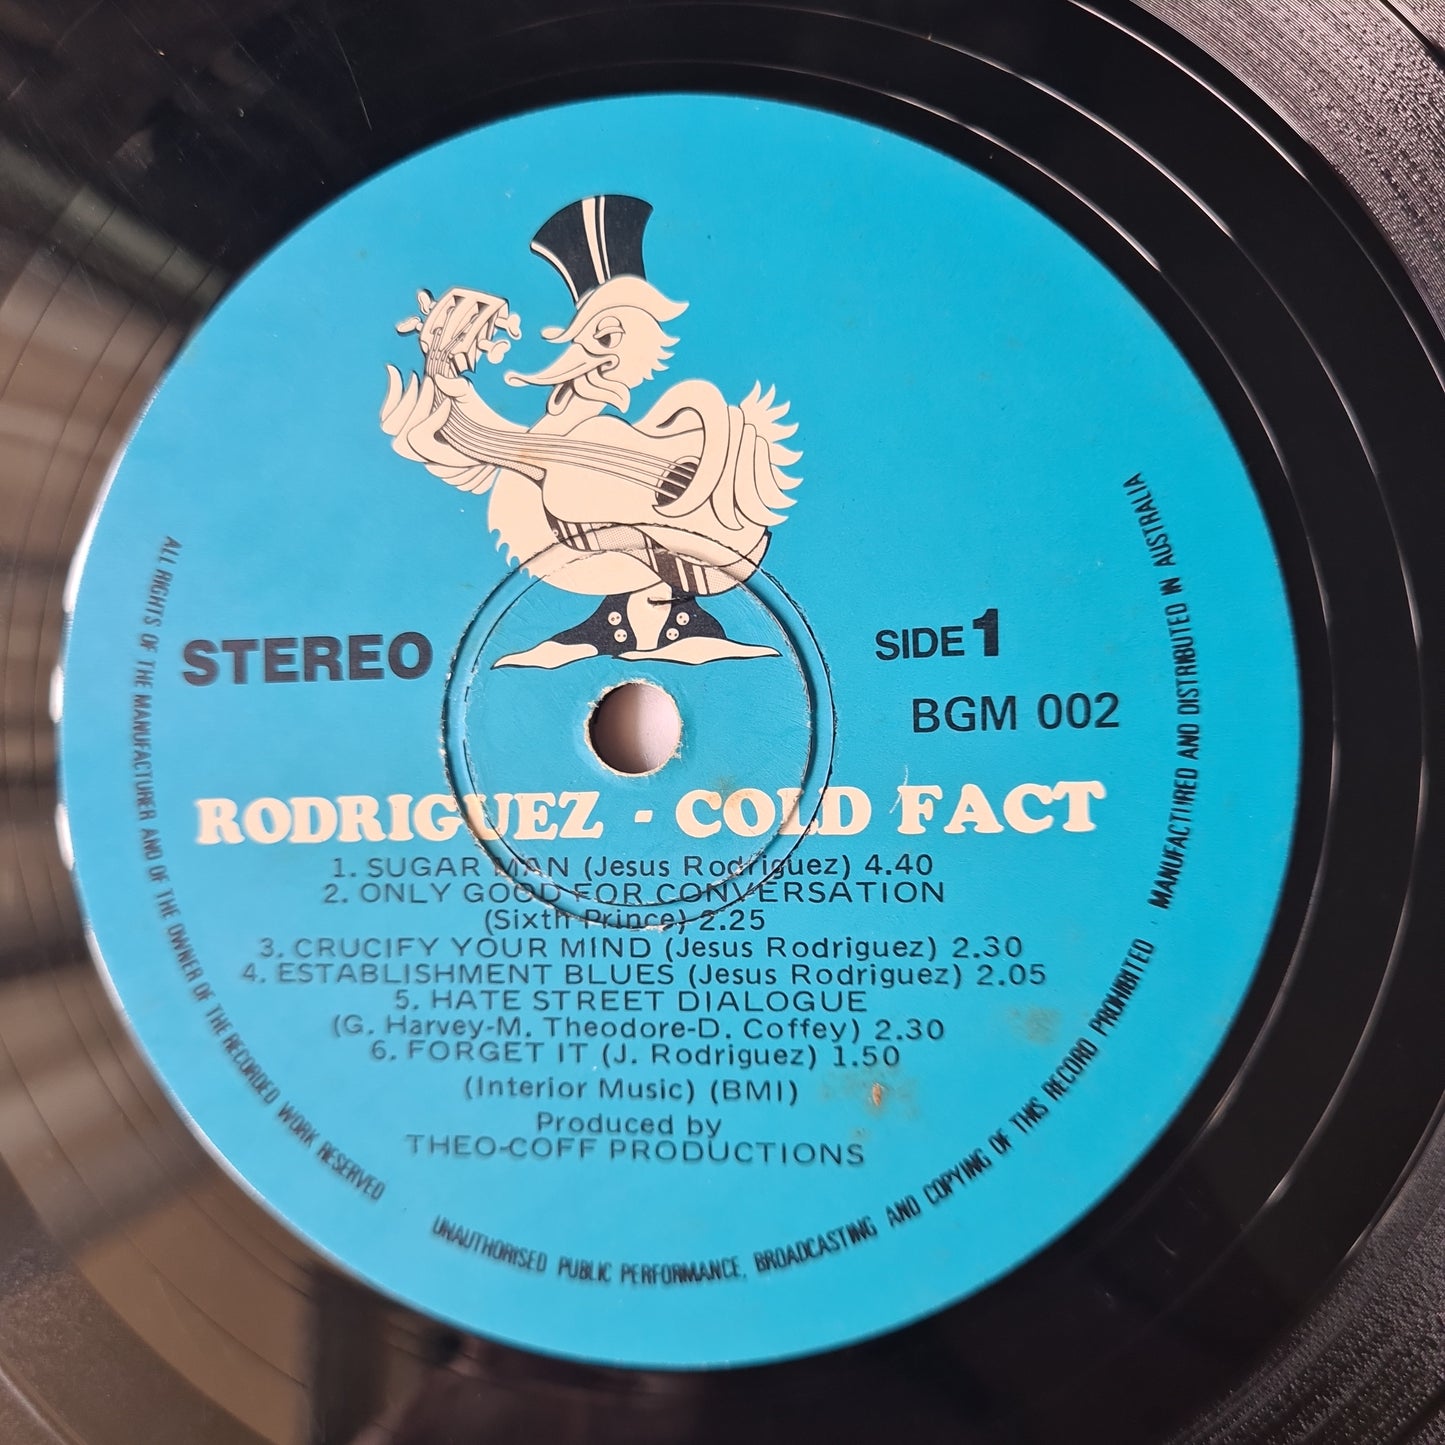 Rodriguez – Cold Fact - 1970 (1978 Australian Pressing) - Vinyl Record